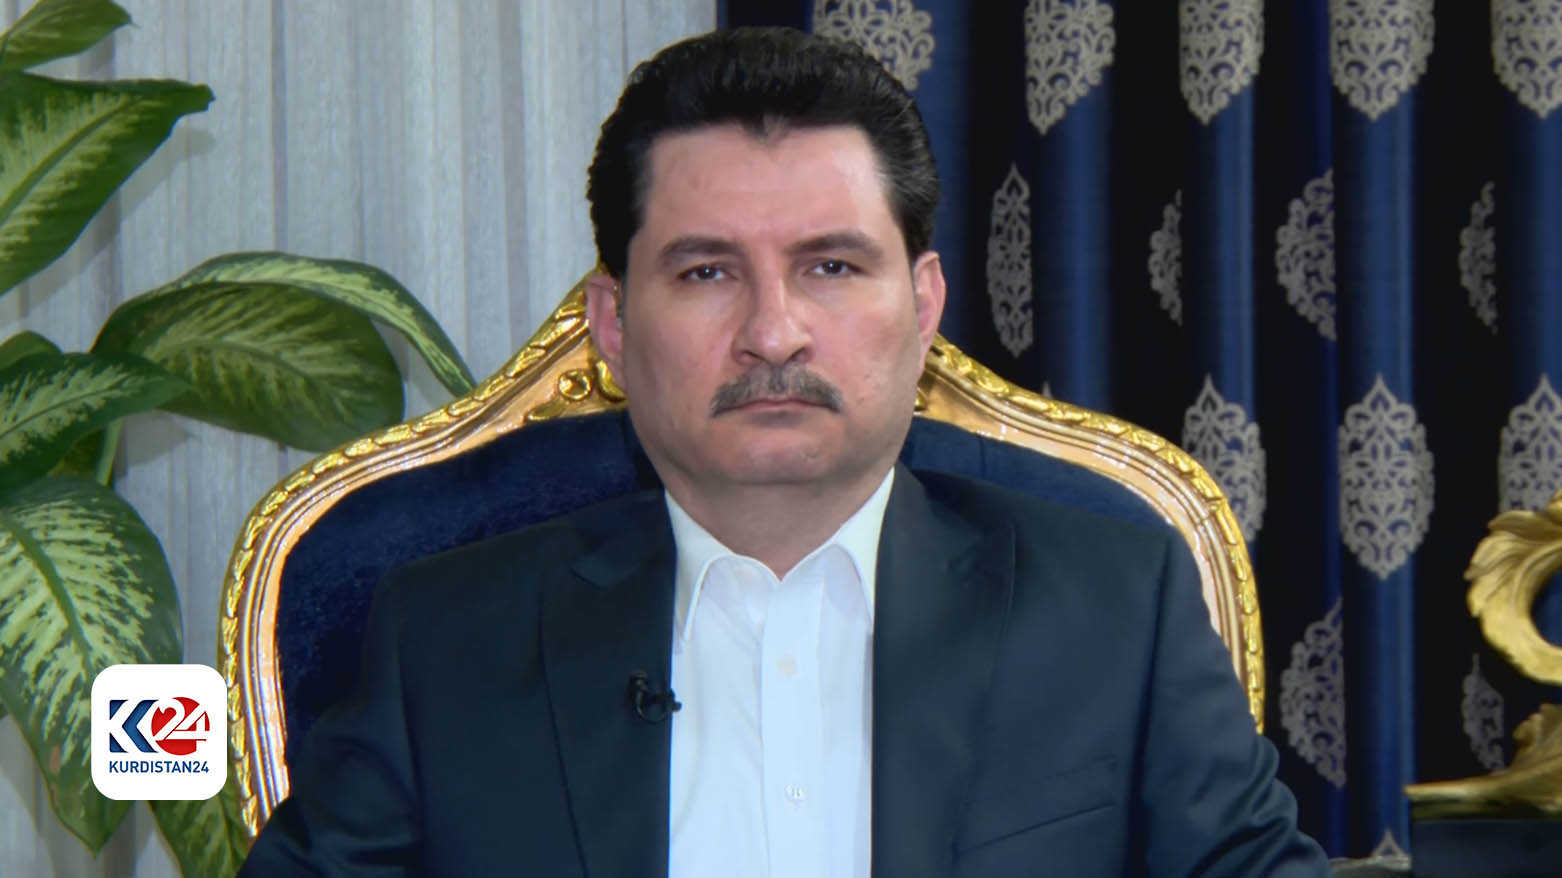 Shakhawan Abdulla, The Deputy Speaker of the Iraqi Parliament. (Photo: Kurdistan24)